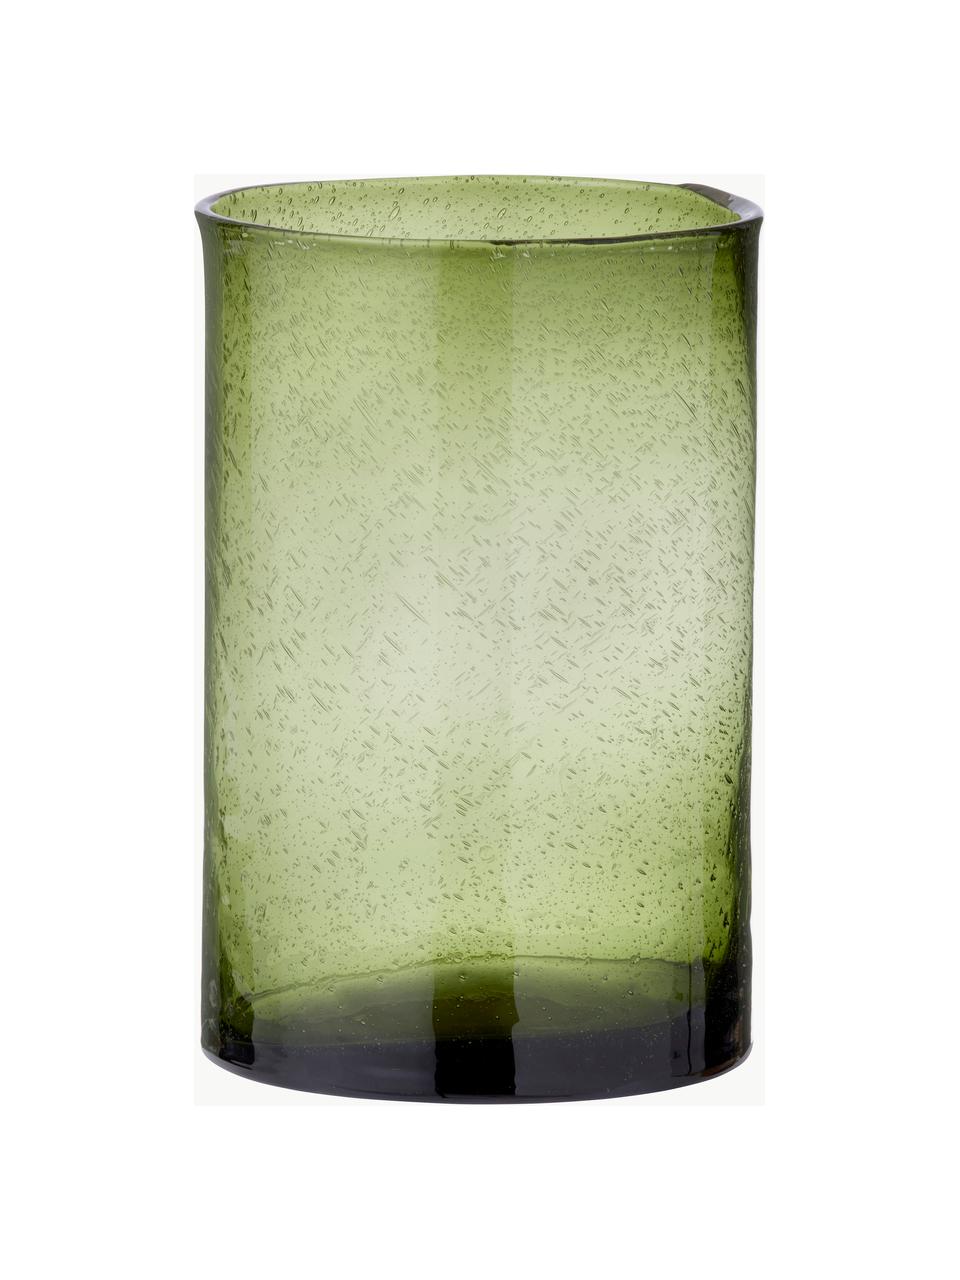 Jarrón de vidrio Salon, 26 cm, Vidrio, Tonos verdes semitransparente, Ø 17 x Al 26 cm